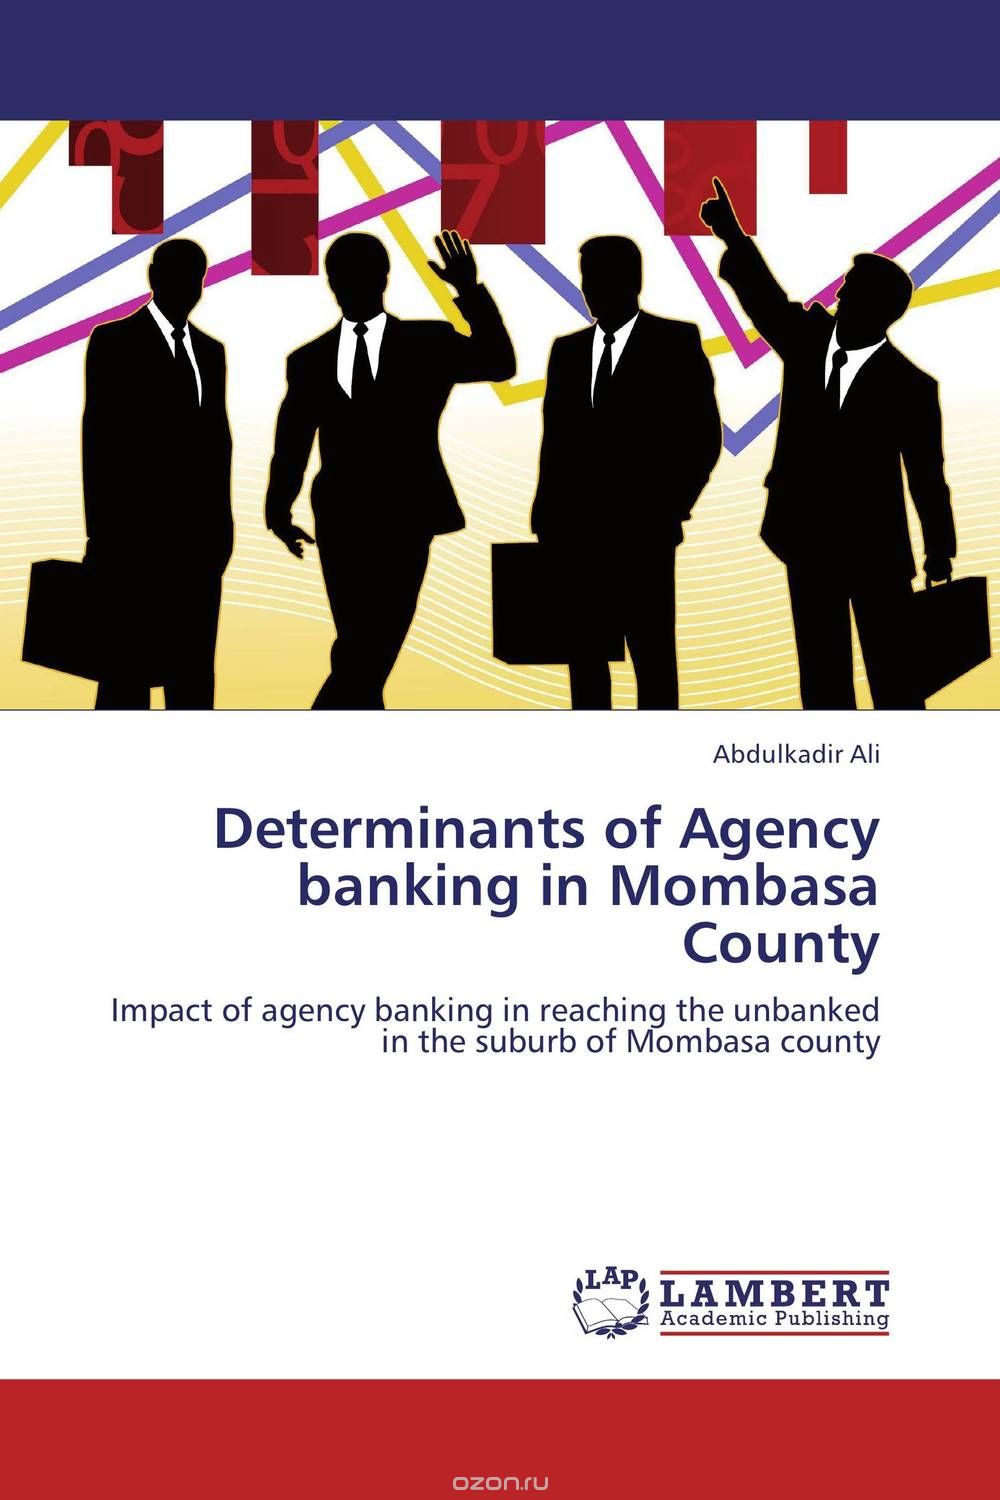 Скачать книгу "Determinants of Agency banking in Mombasa County"